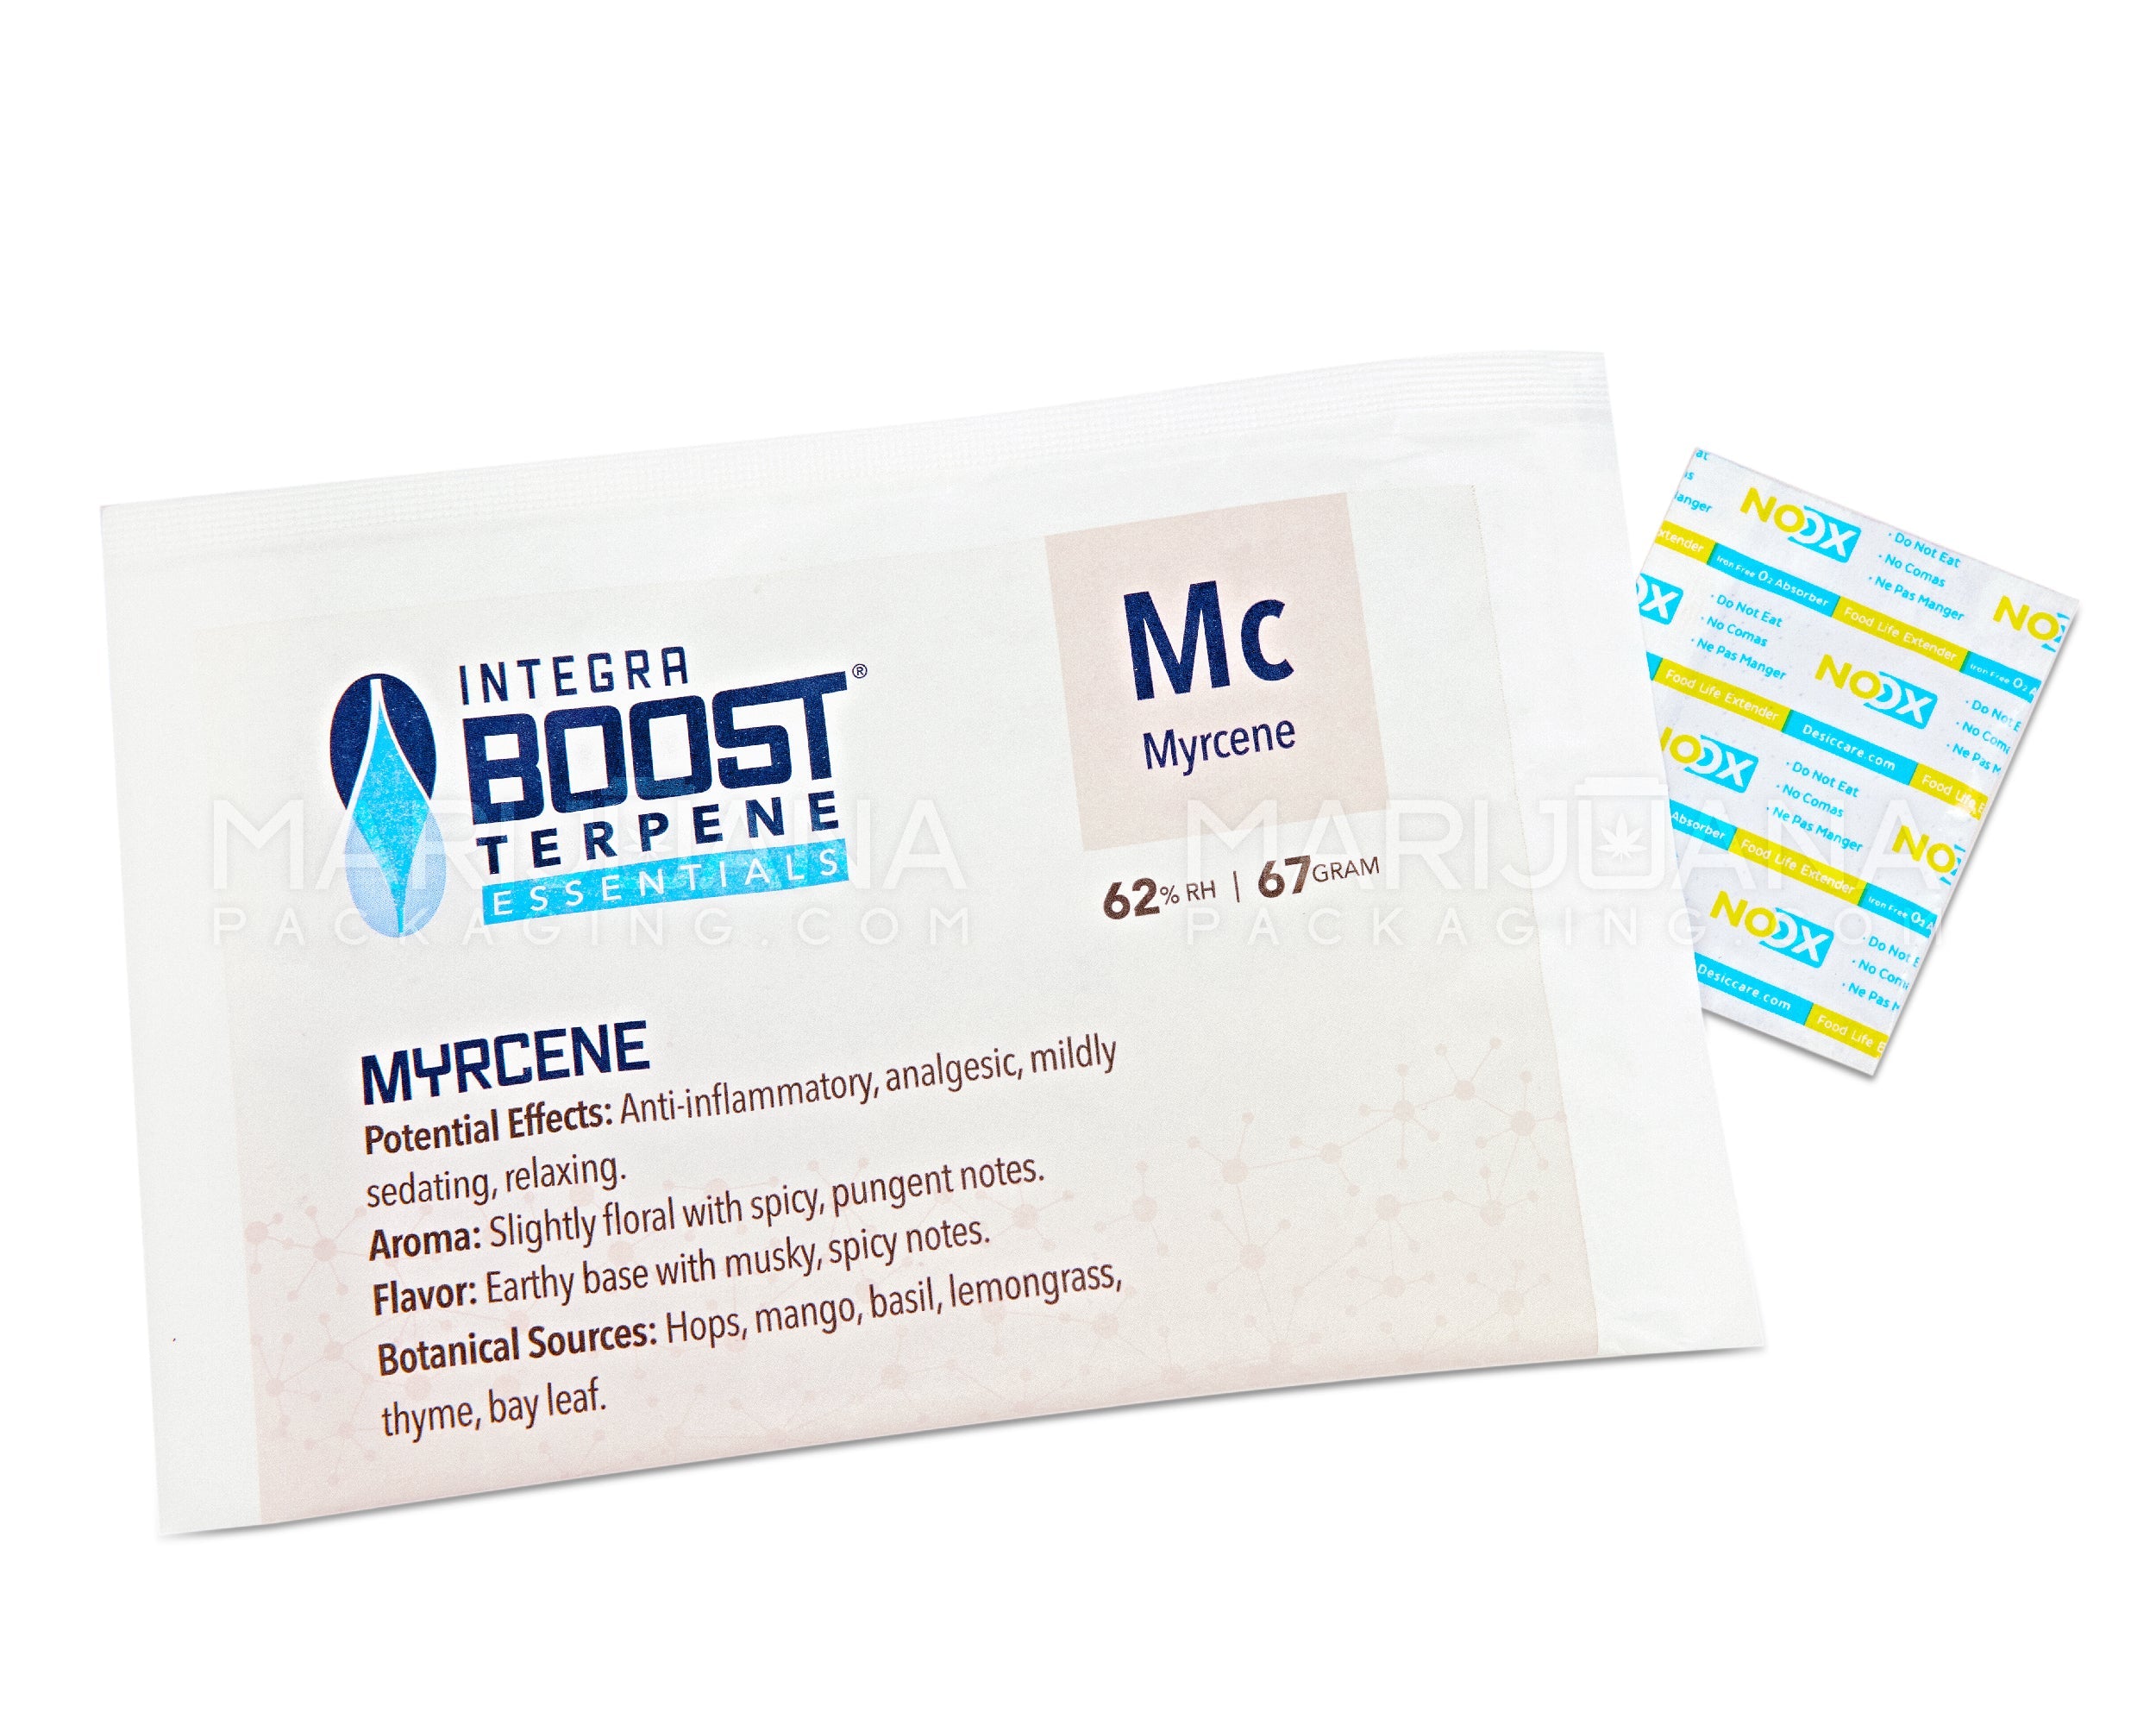 INTEGRA Boost Terpene Essentials Myrcene Humidity Pack | 67 Grams - 62% | Sample - 3